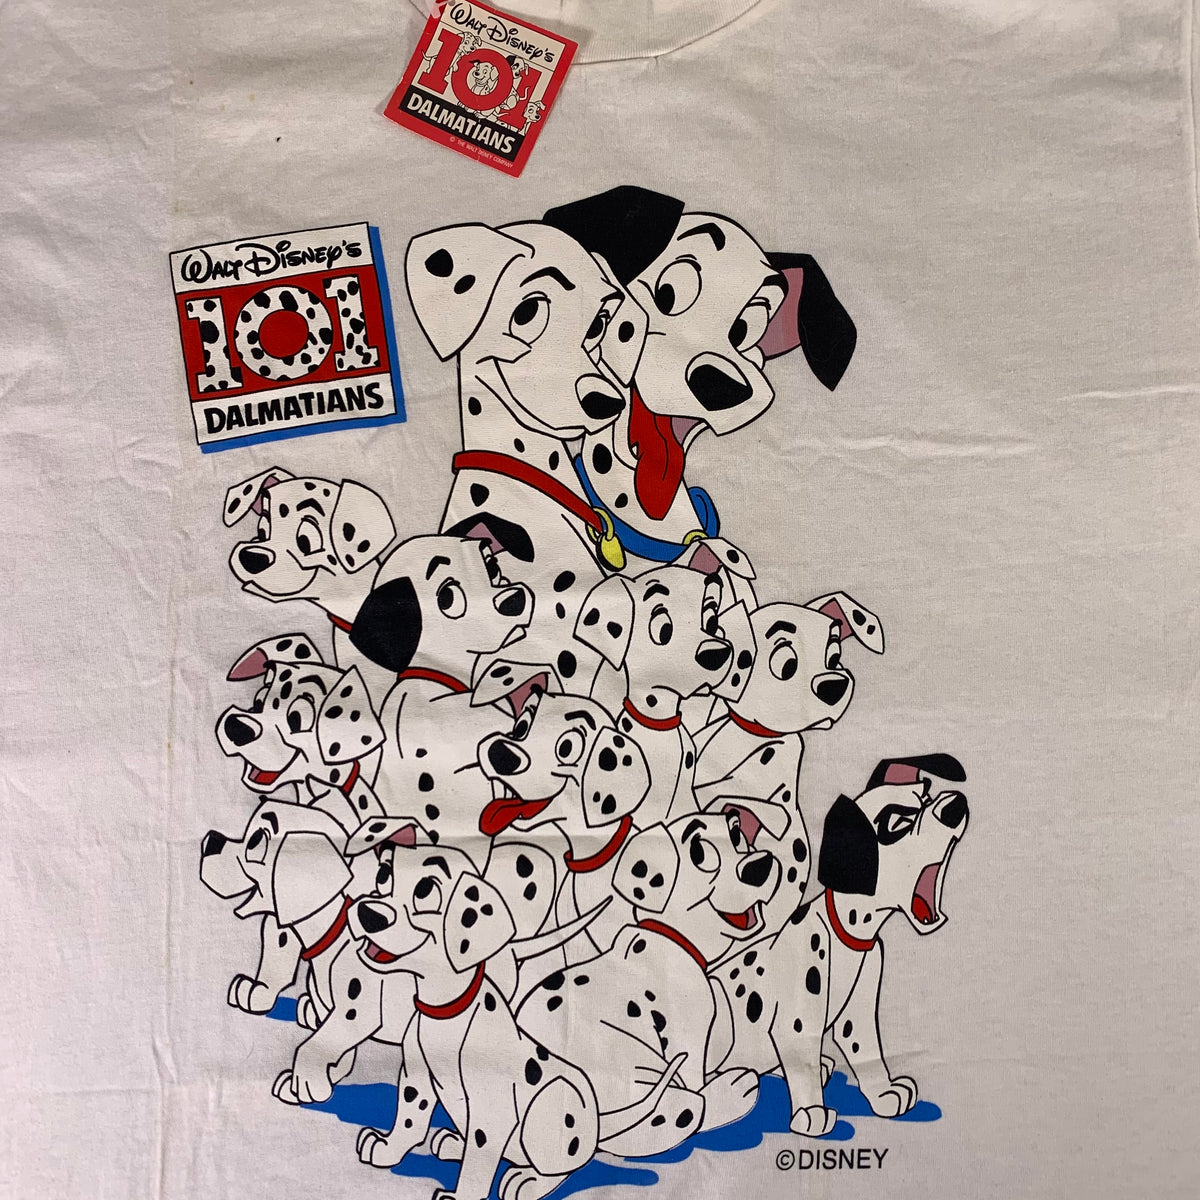 Vintage 101 Dalmatians &quot;Disney&quot; T-Shirt